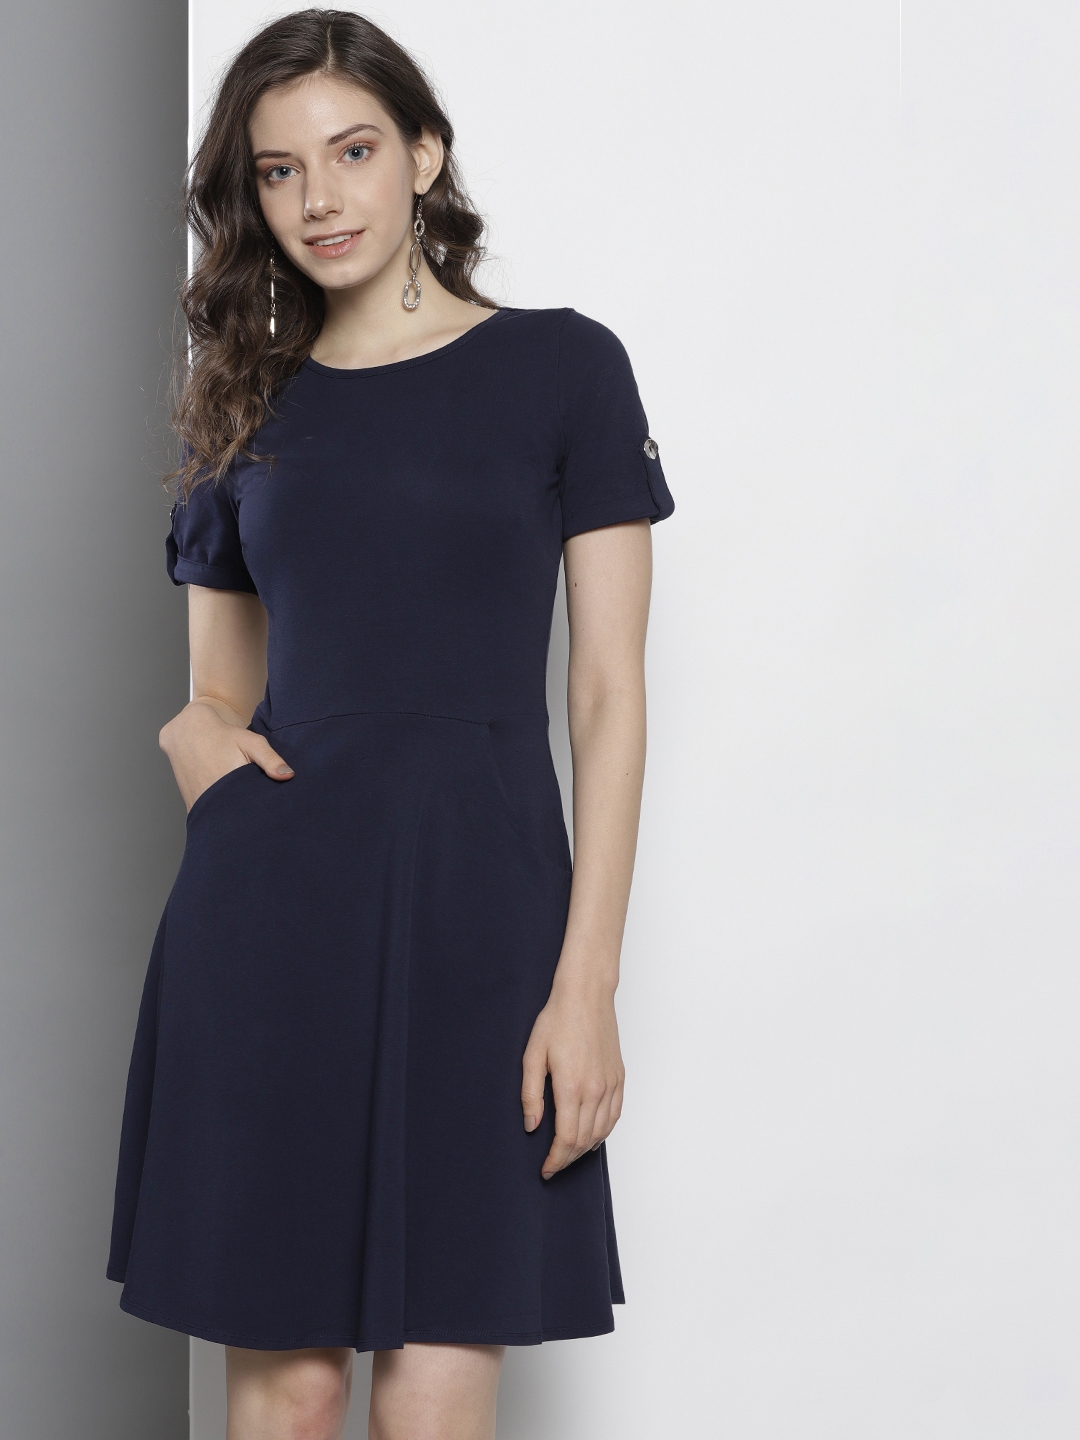 Buy DOROTHY PERKINS Women Navy Blue Fit & Flare Dress - Dresses for ...